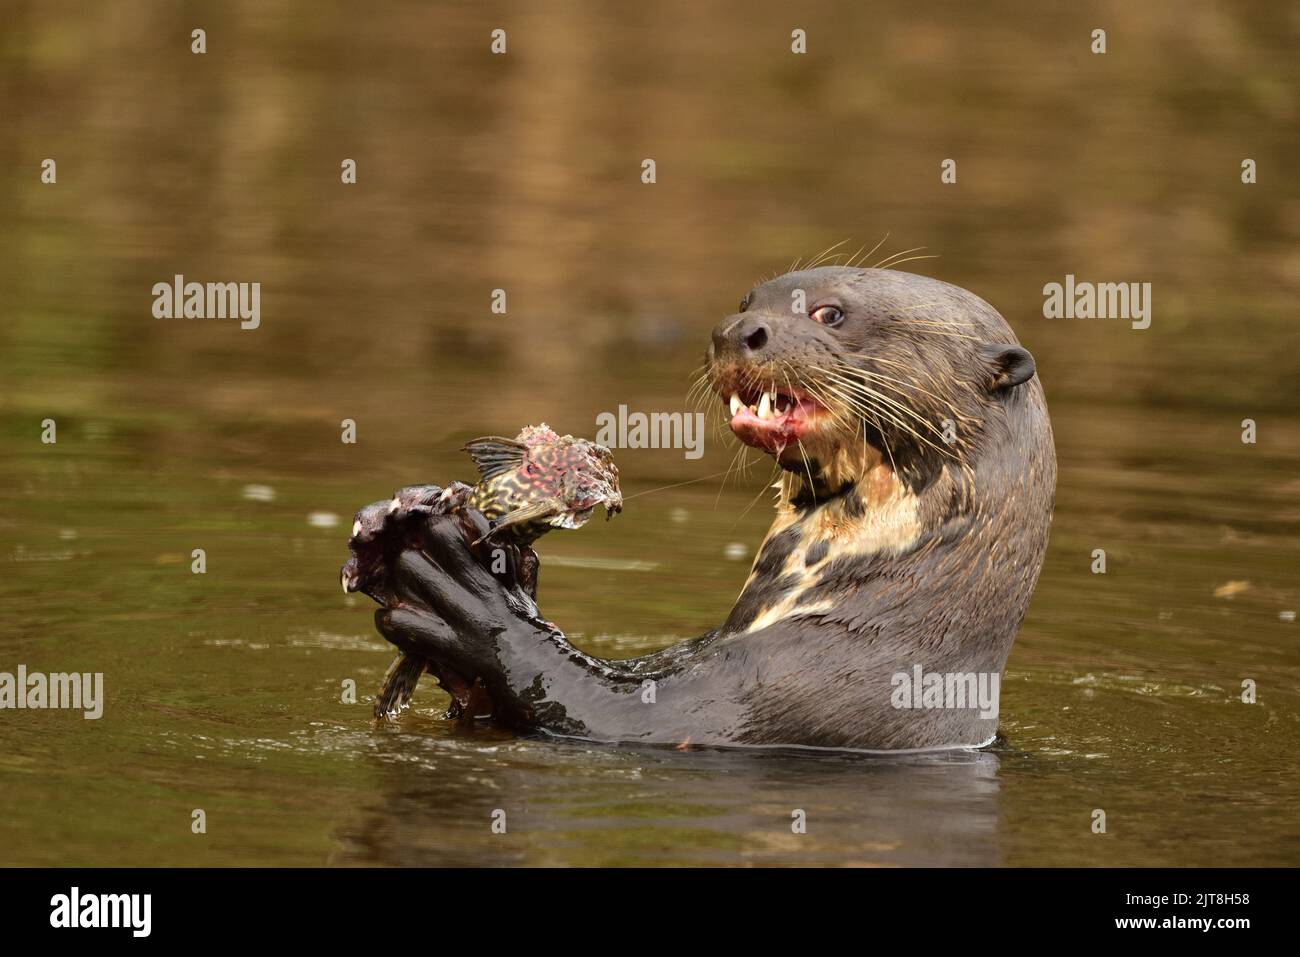 Navegando no Corixo Negro Pantanal, encotrei esta Ariranha comendo um peixe Mandi. Stock Photo